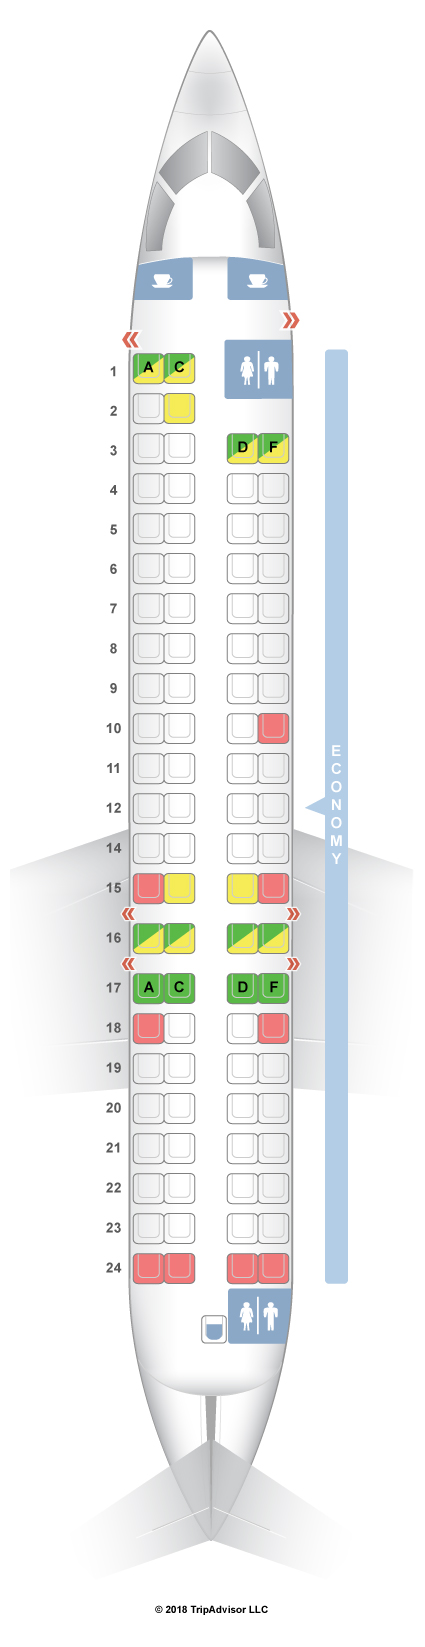 canada regional jet 900 seating chart